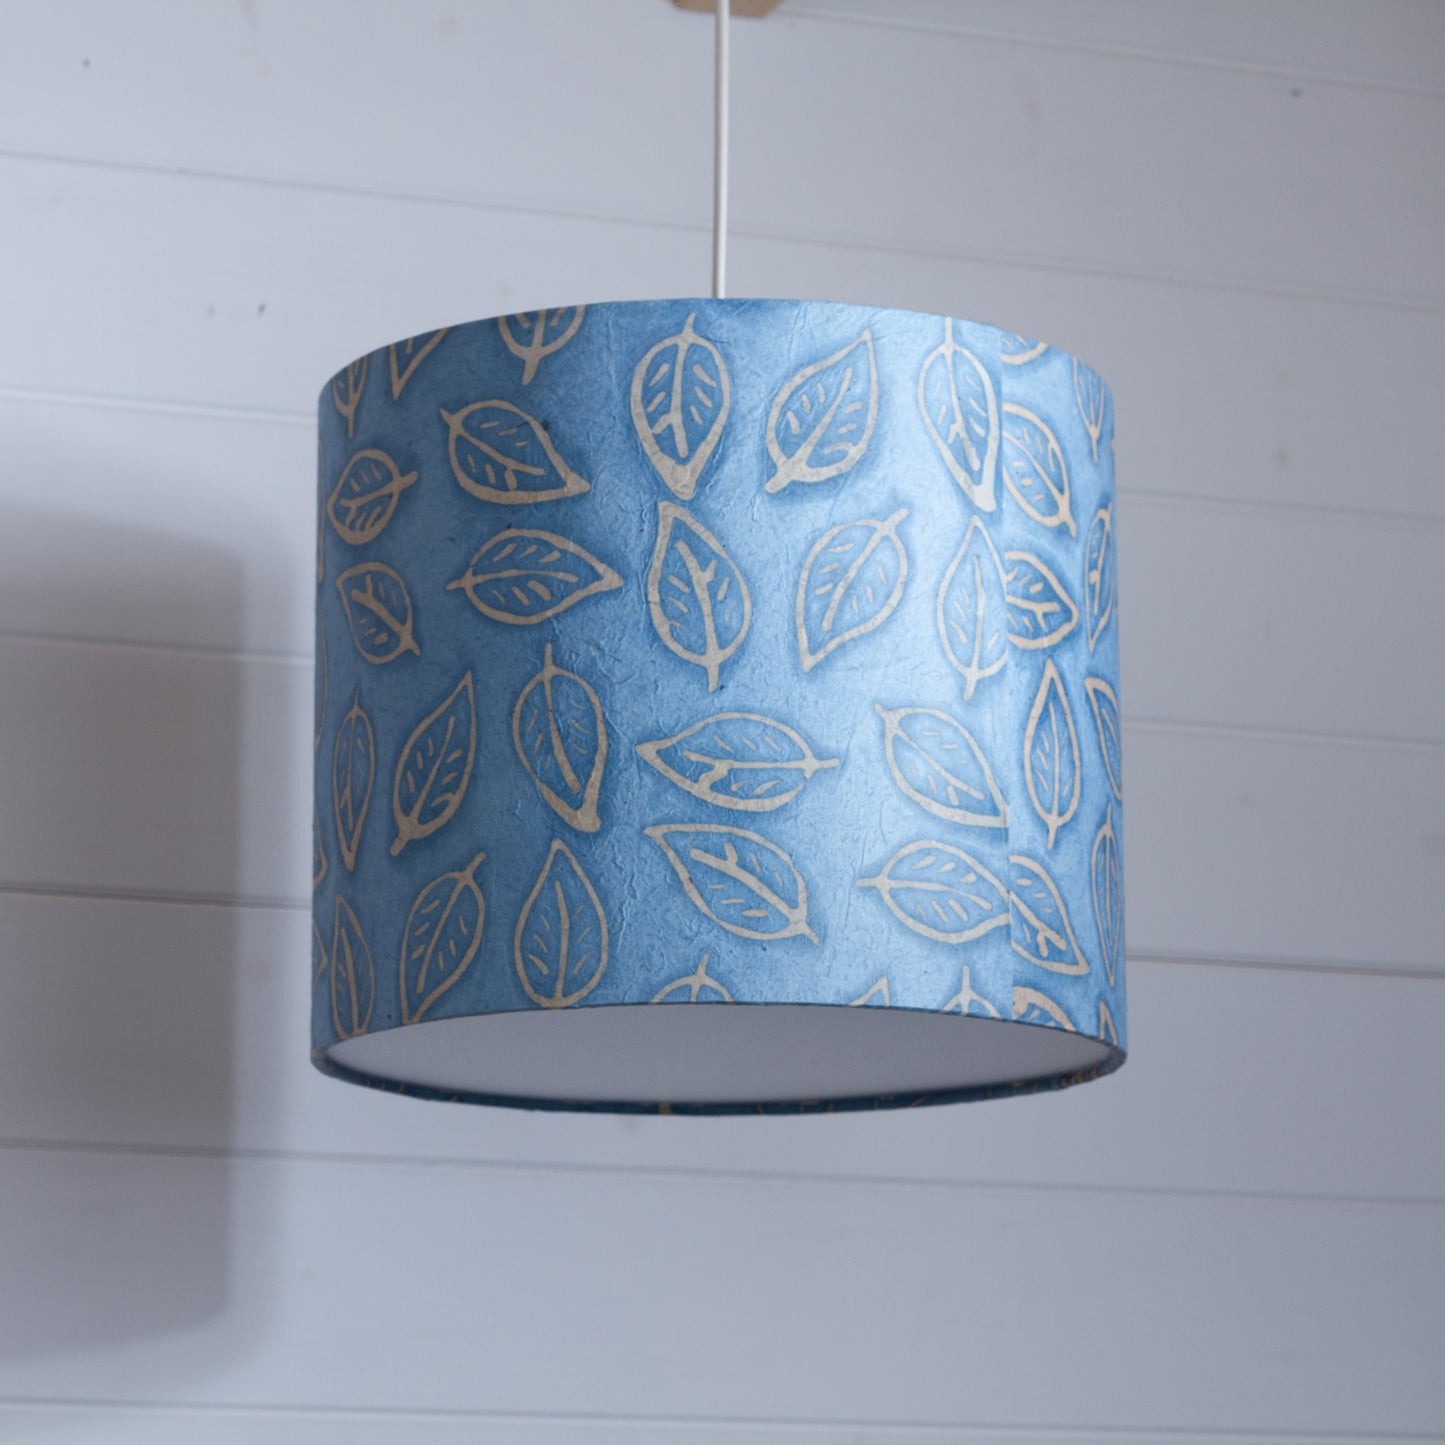 Drum Lamp Shade - P31 - Batik Leaf on Blue, 30cm(d) x 25cm(h)